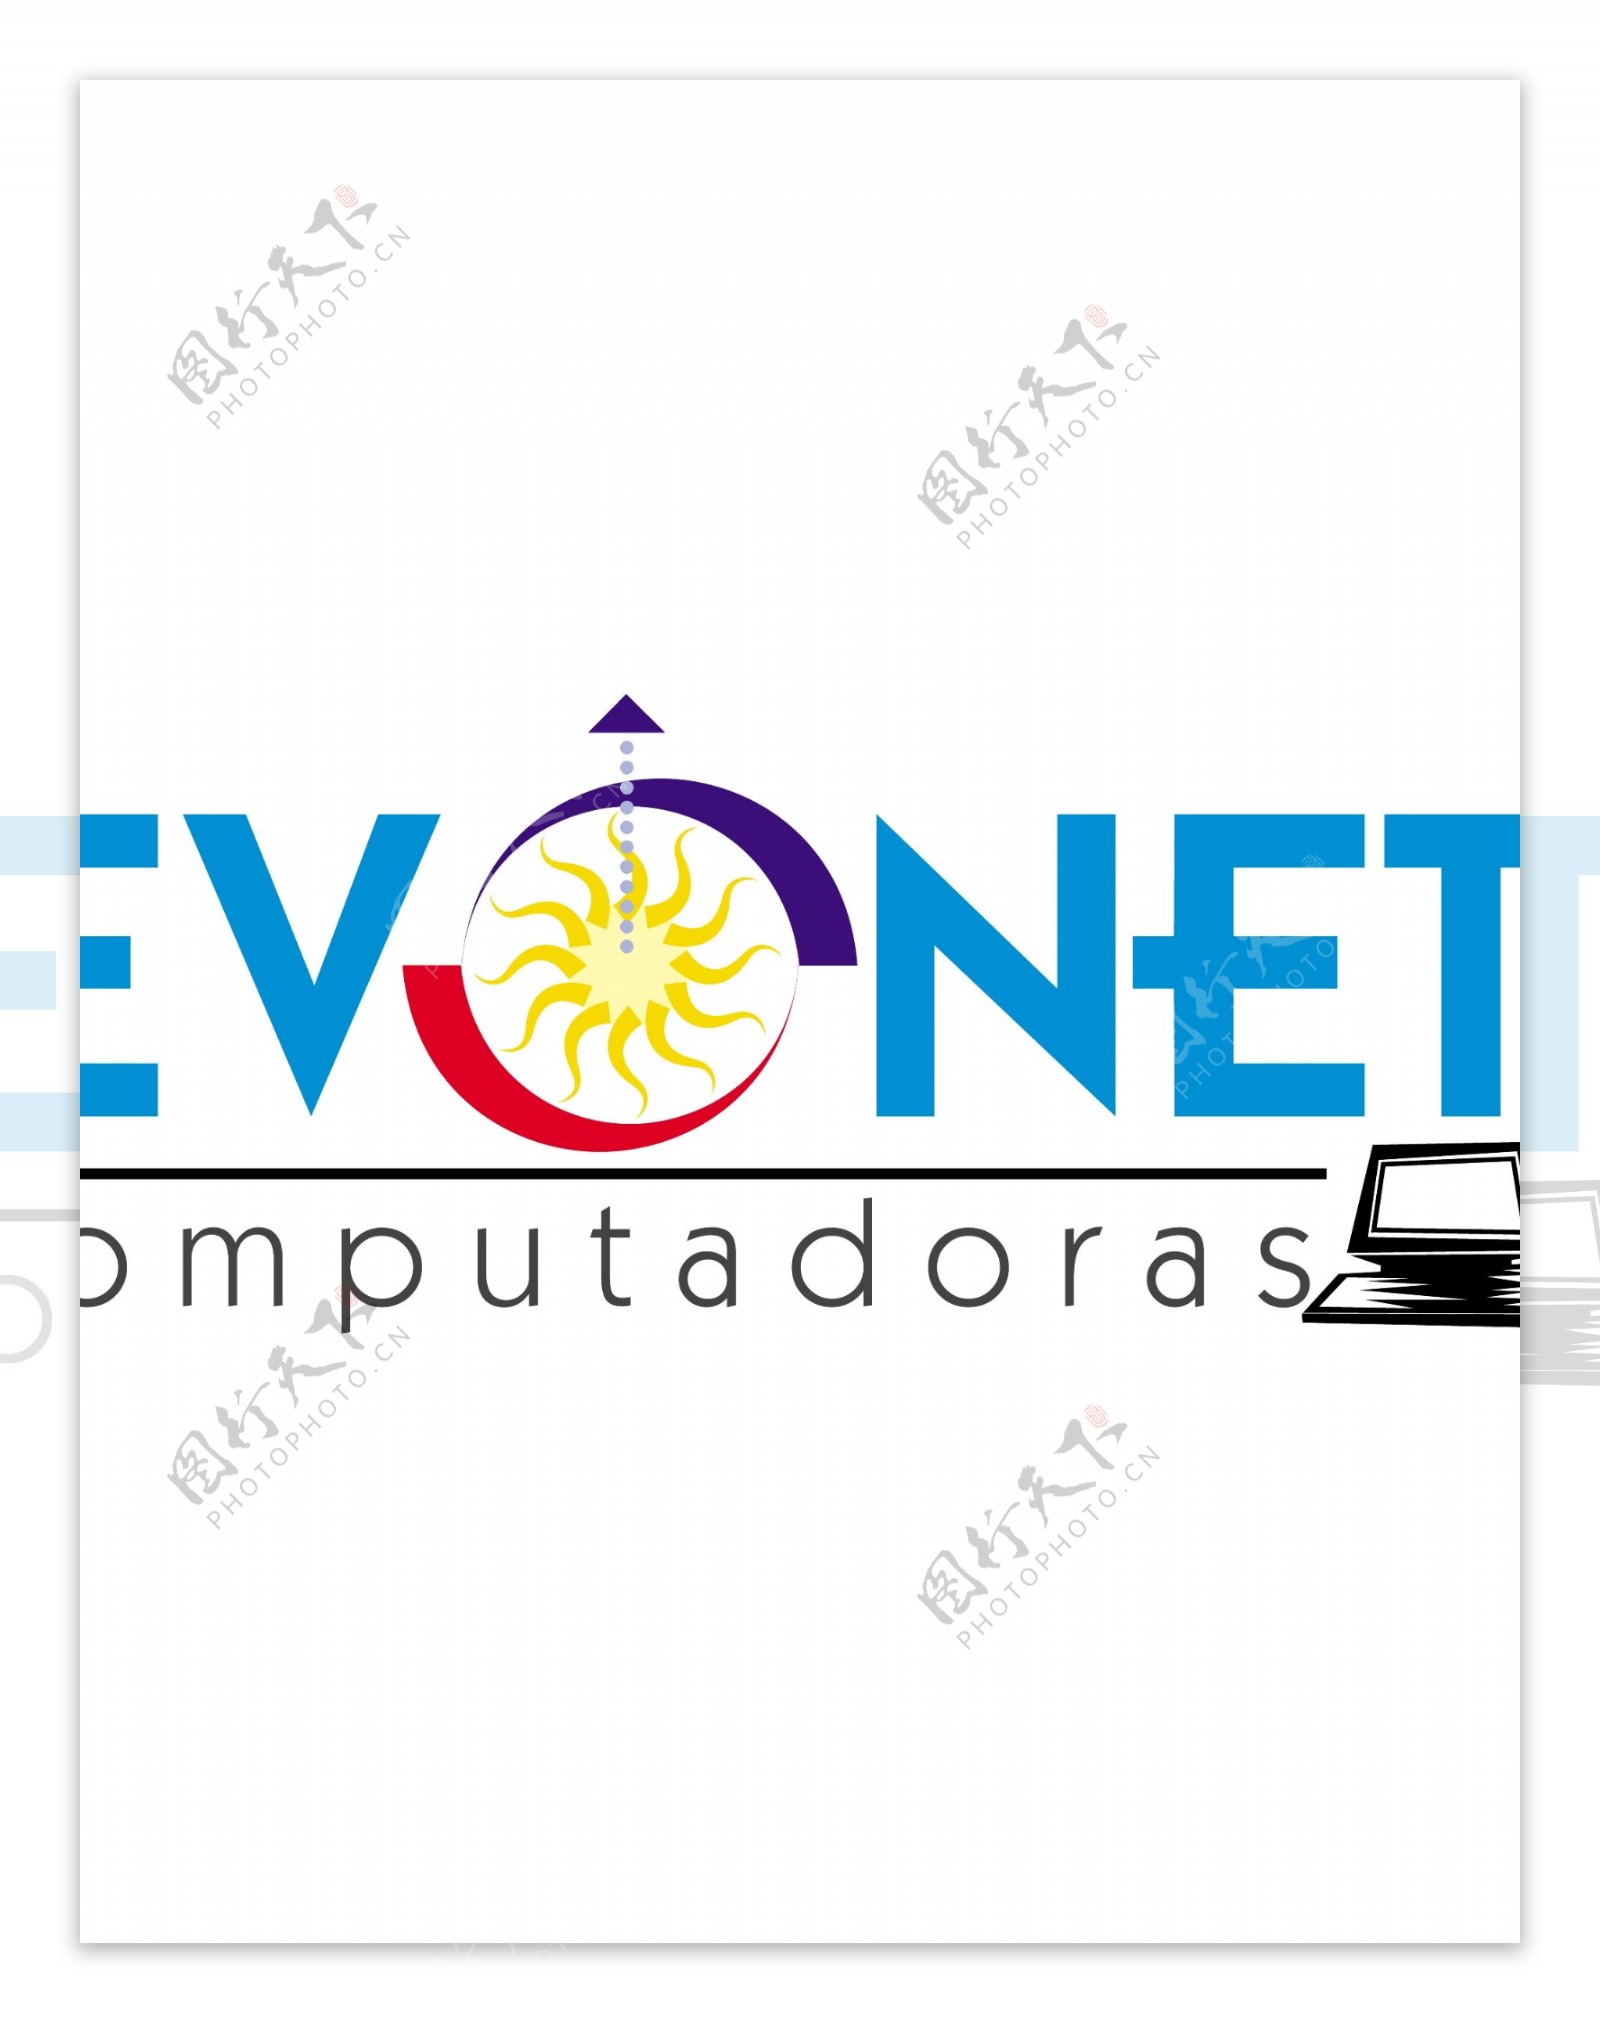 Evonetcomputadoraslogo设计欣赏Evonetcomputadoras电脑公司标志下载标志设计欣赏